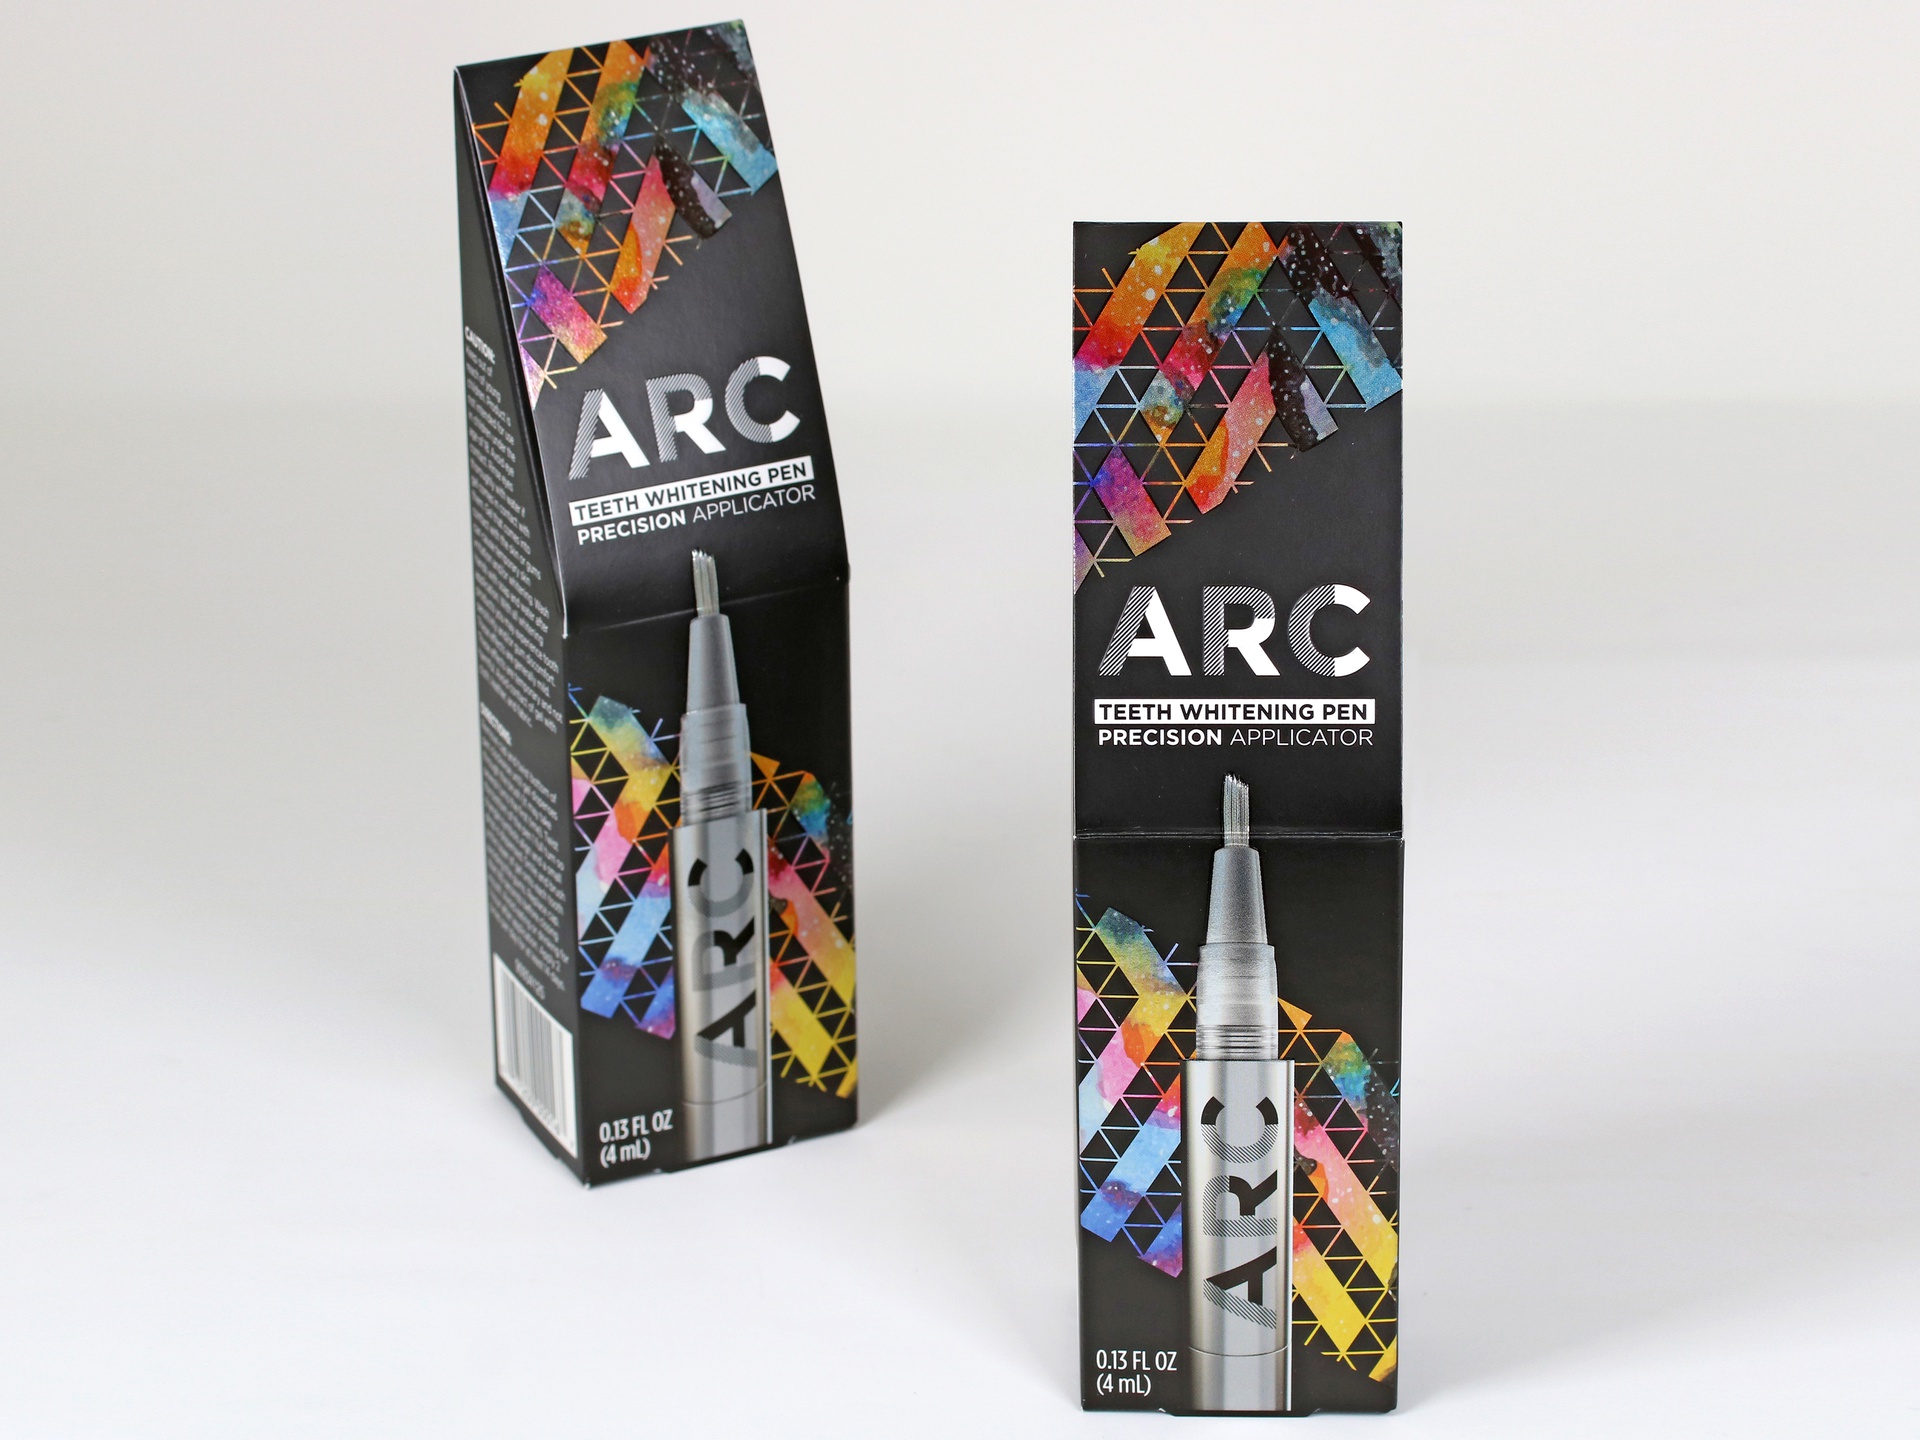 ARC Teeth Whitening Pen packaging